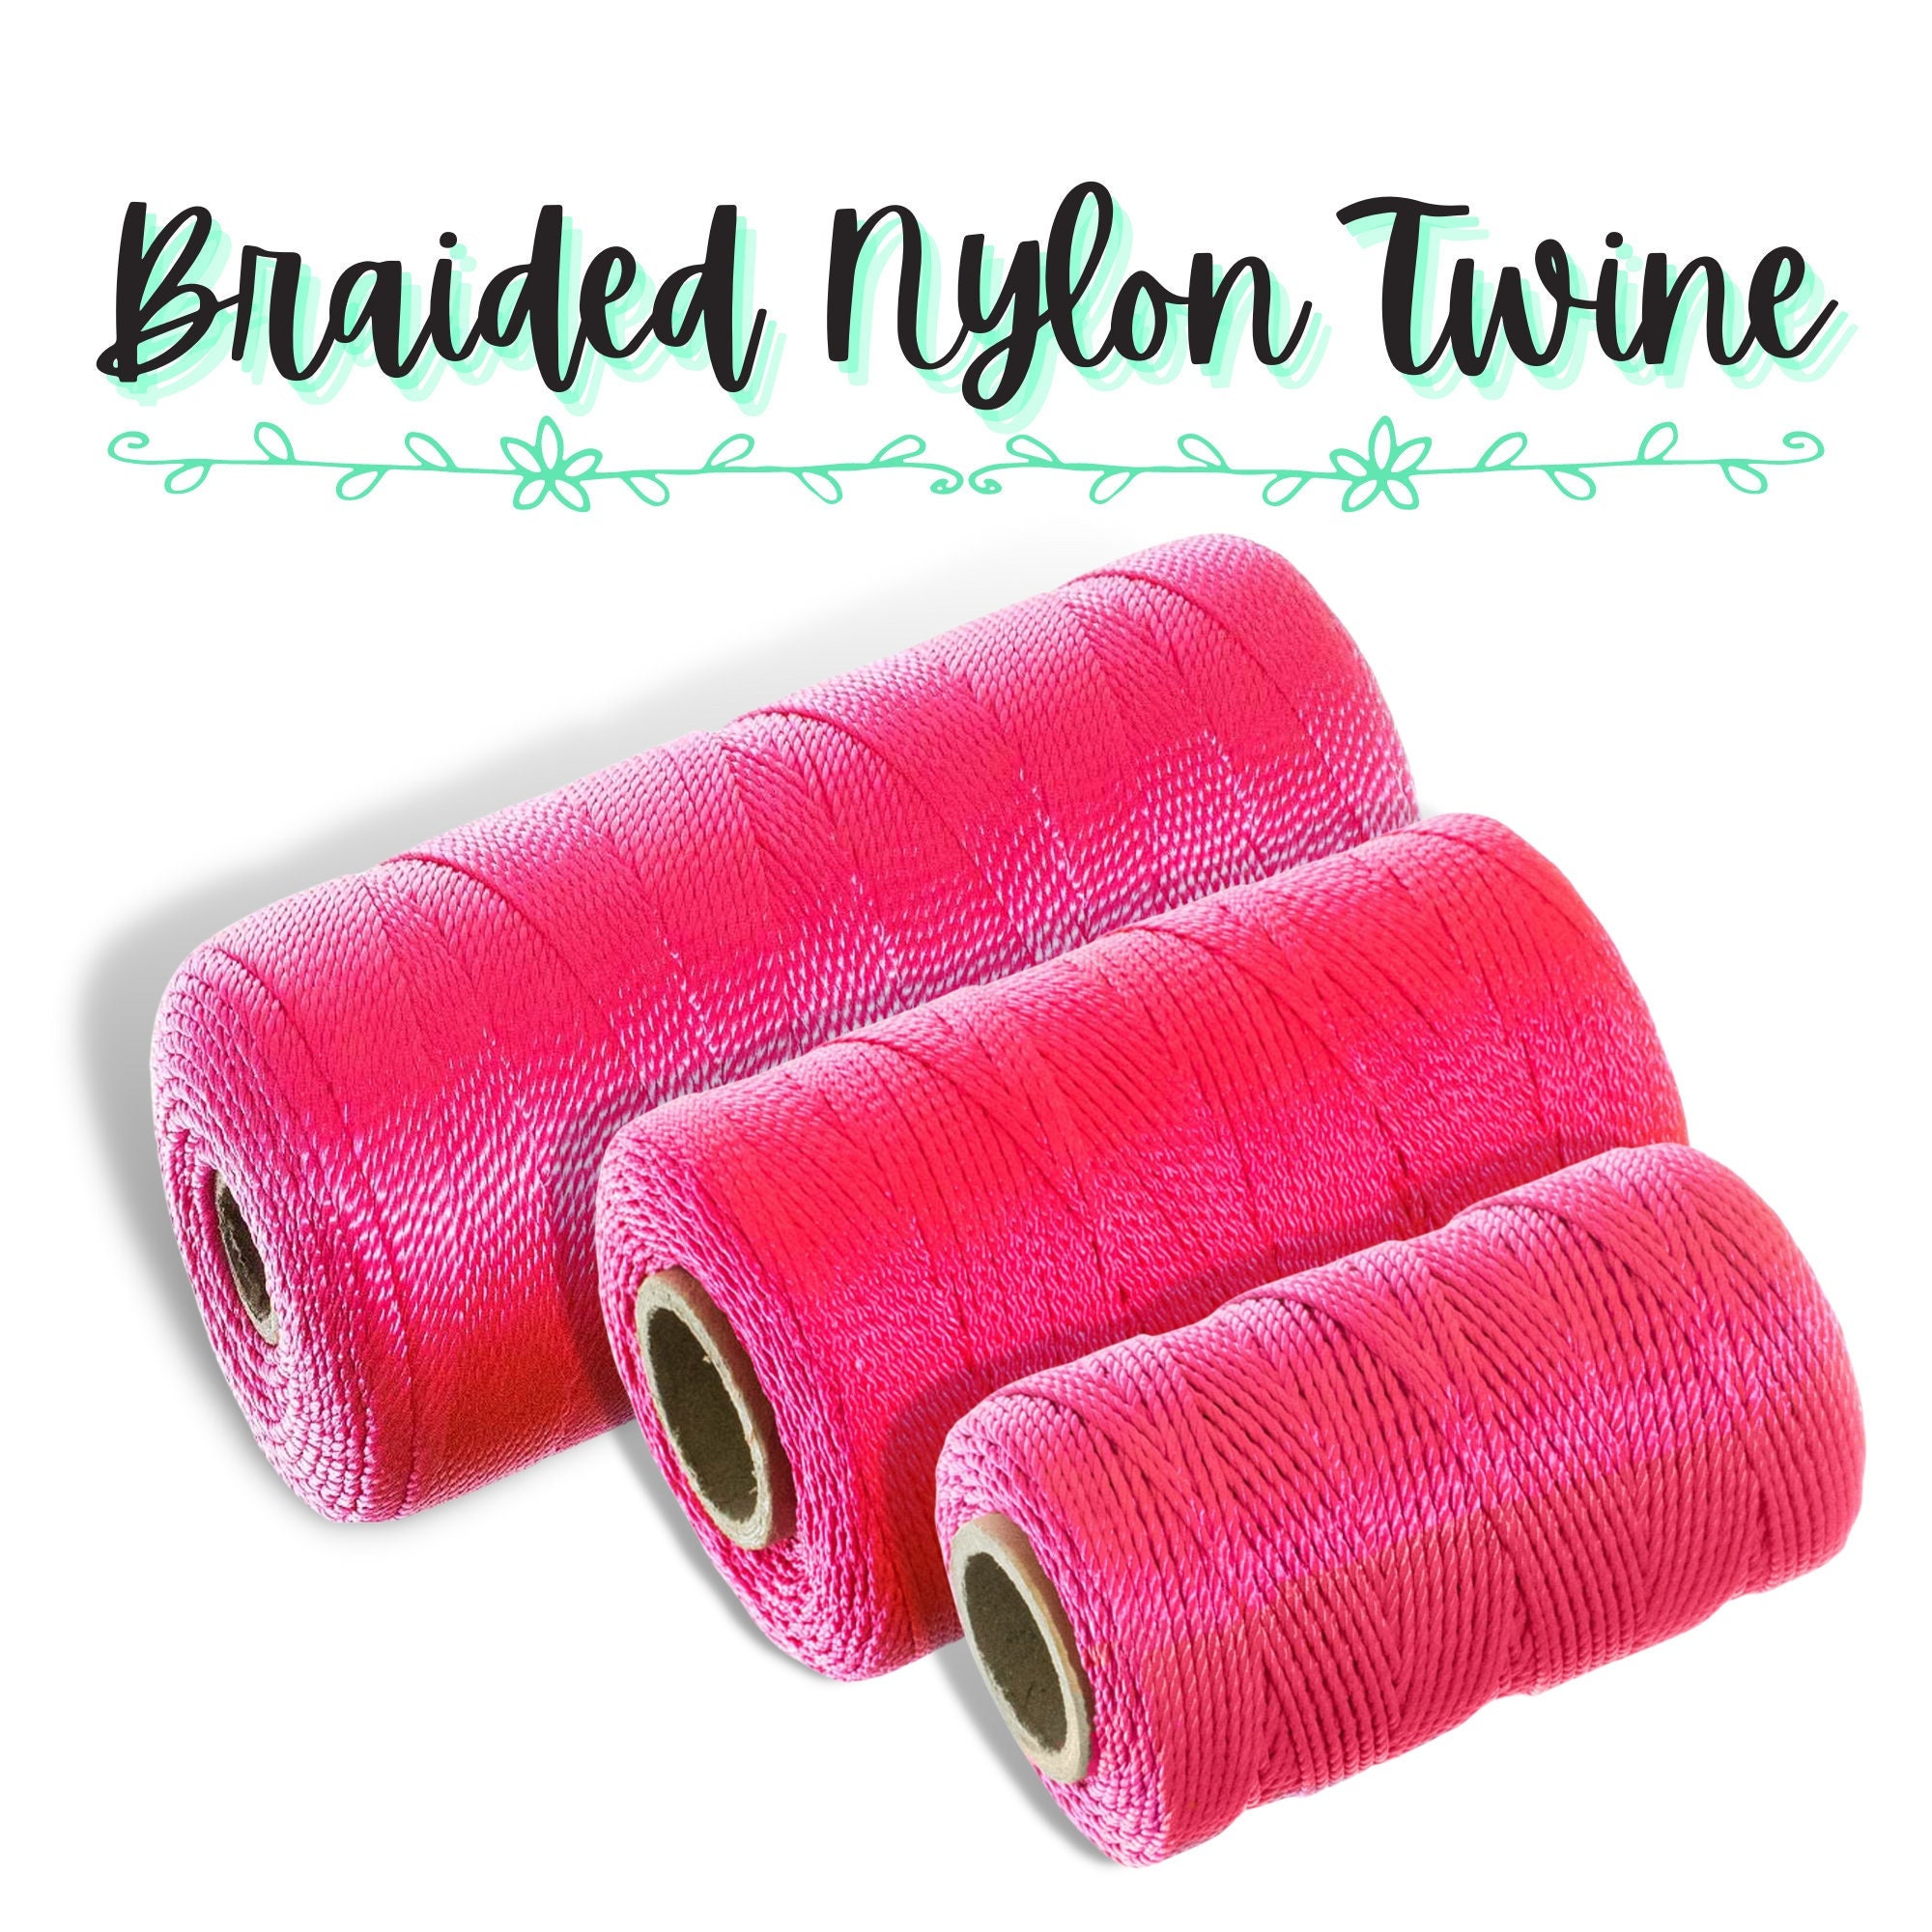 Twisted Nylon Seine Twine